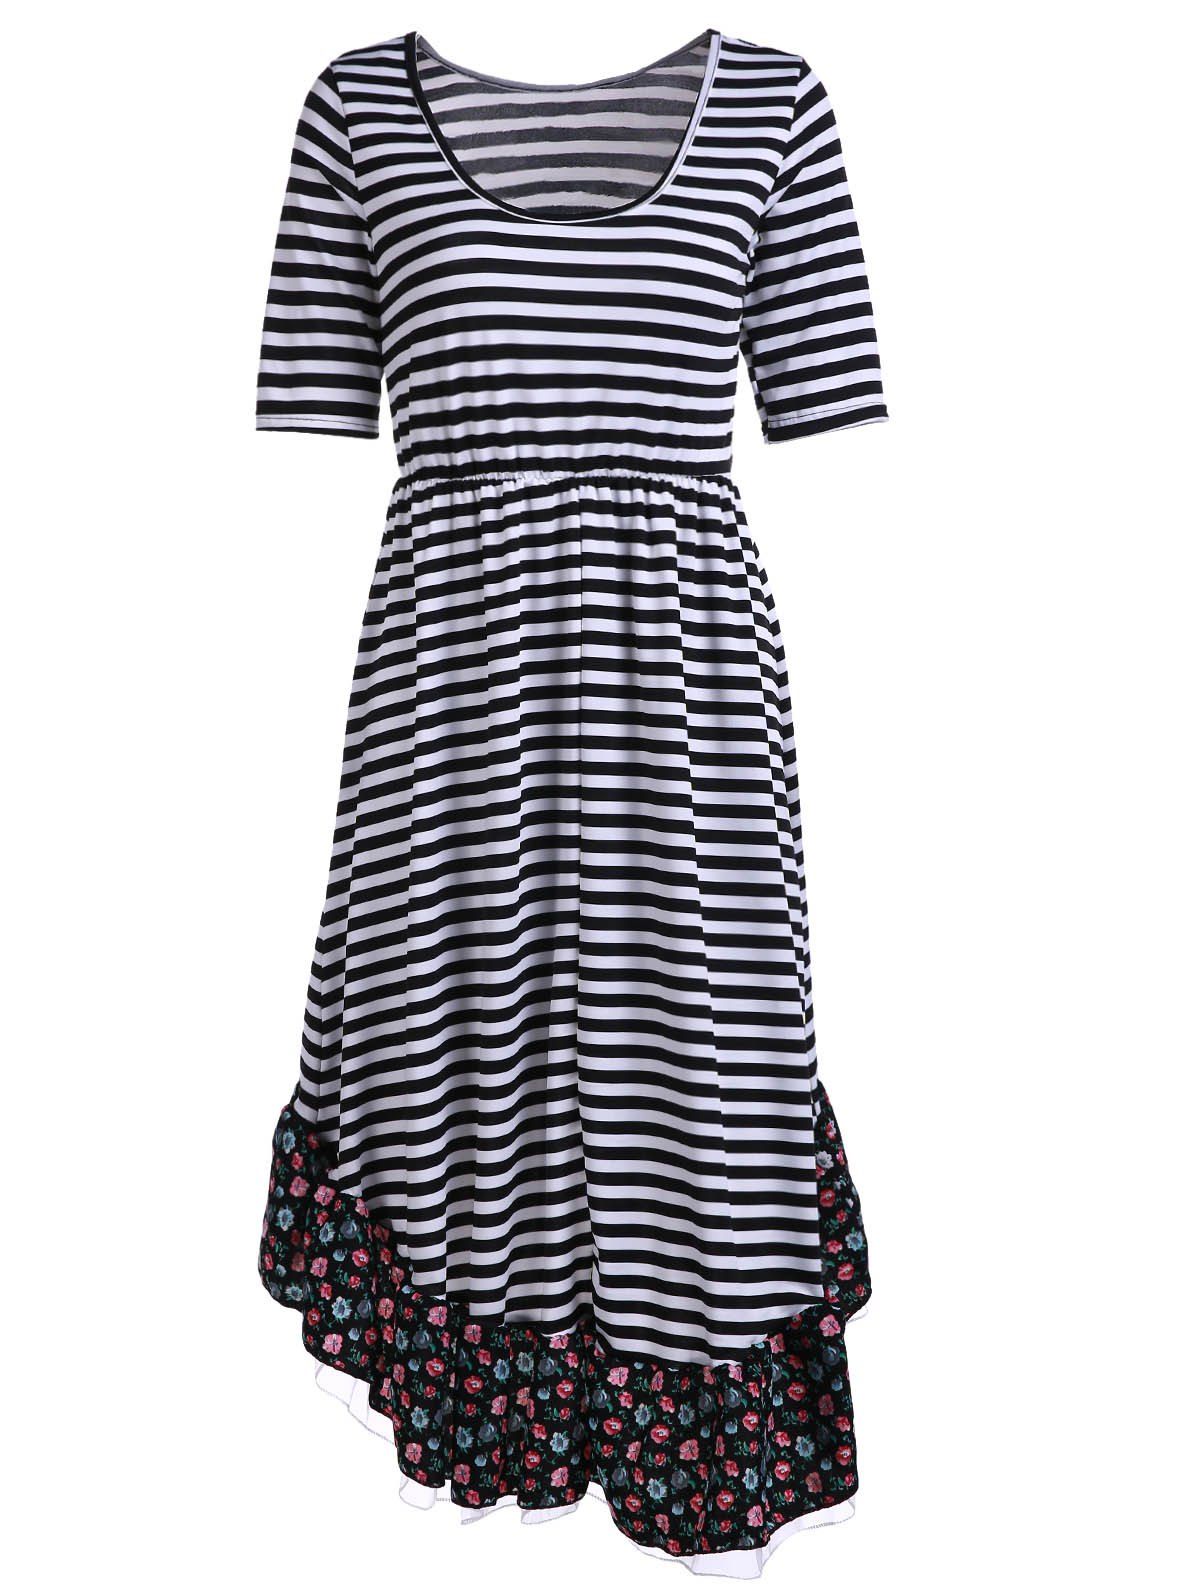 Shops Stylish Round Collar 3/4 Sleeve Striped Floral Print Asymmetrical Women's Dress  